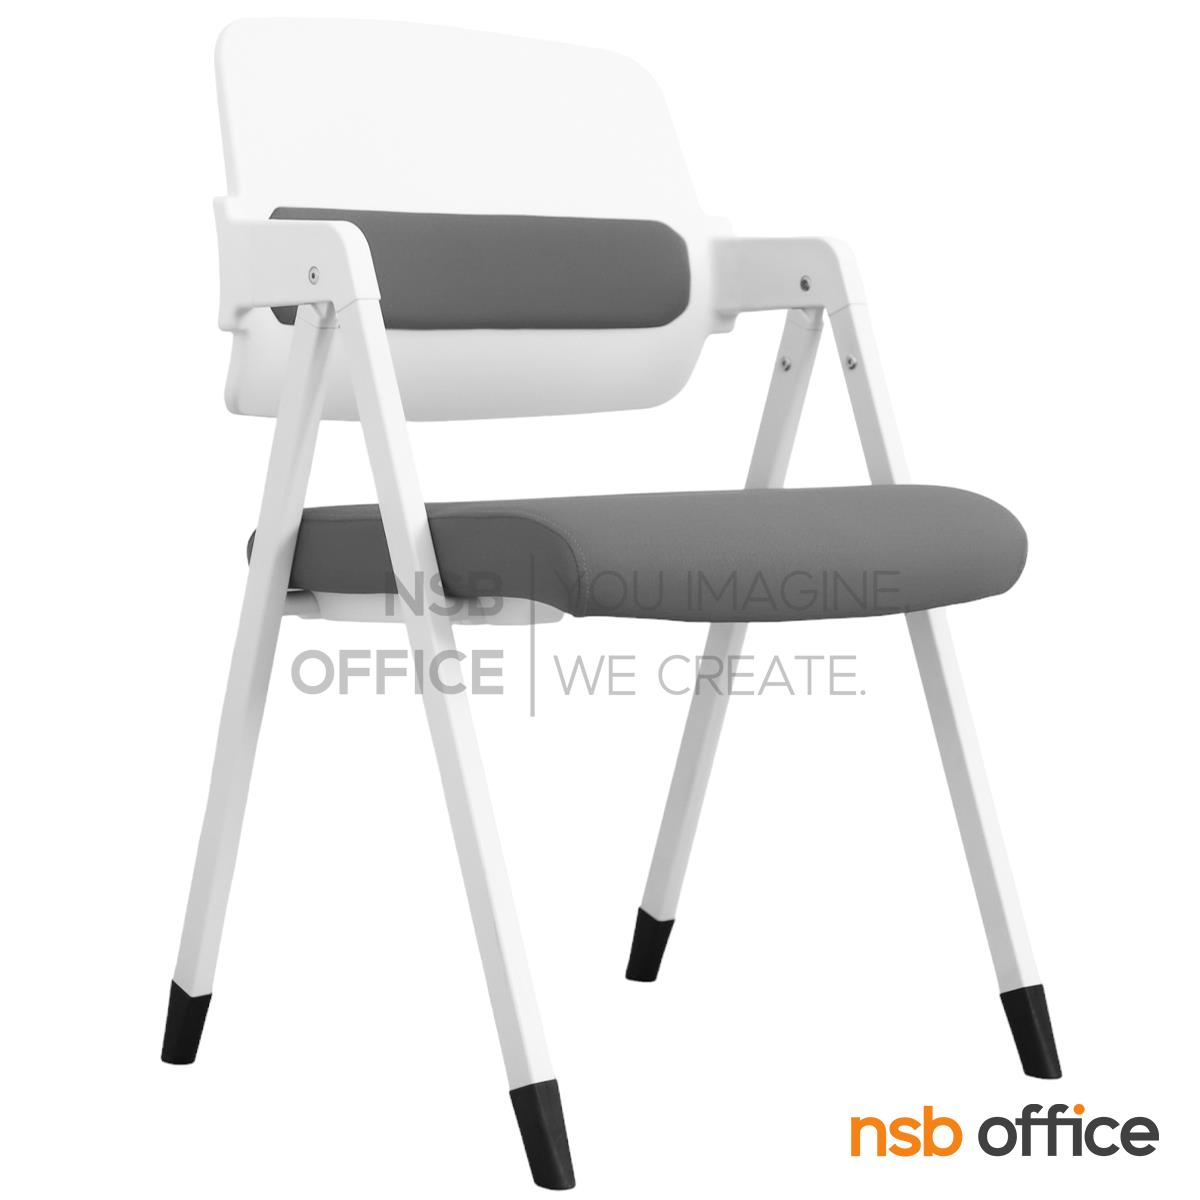 B05A206:เก้าอี้อเนกประสงค์เฟรมโพลี่  รุ่น Nicole (นิโคล)  ขาเหล็ก